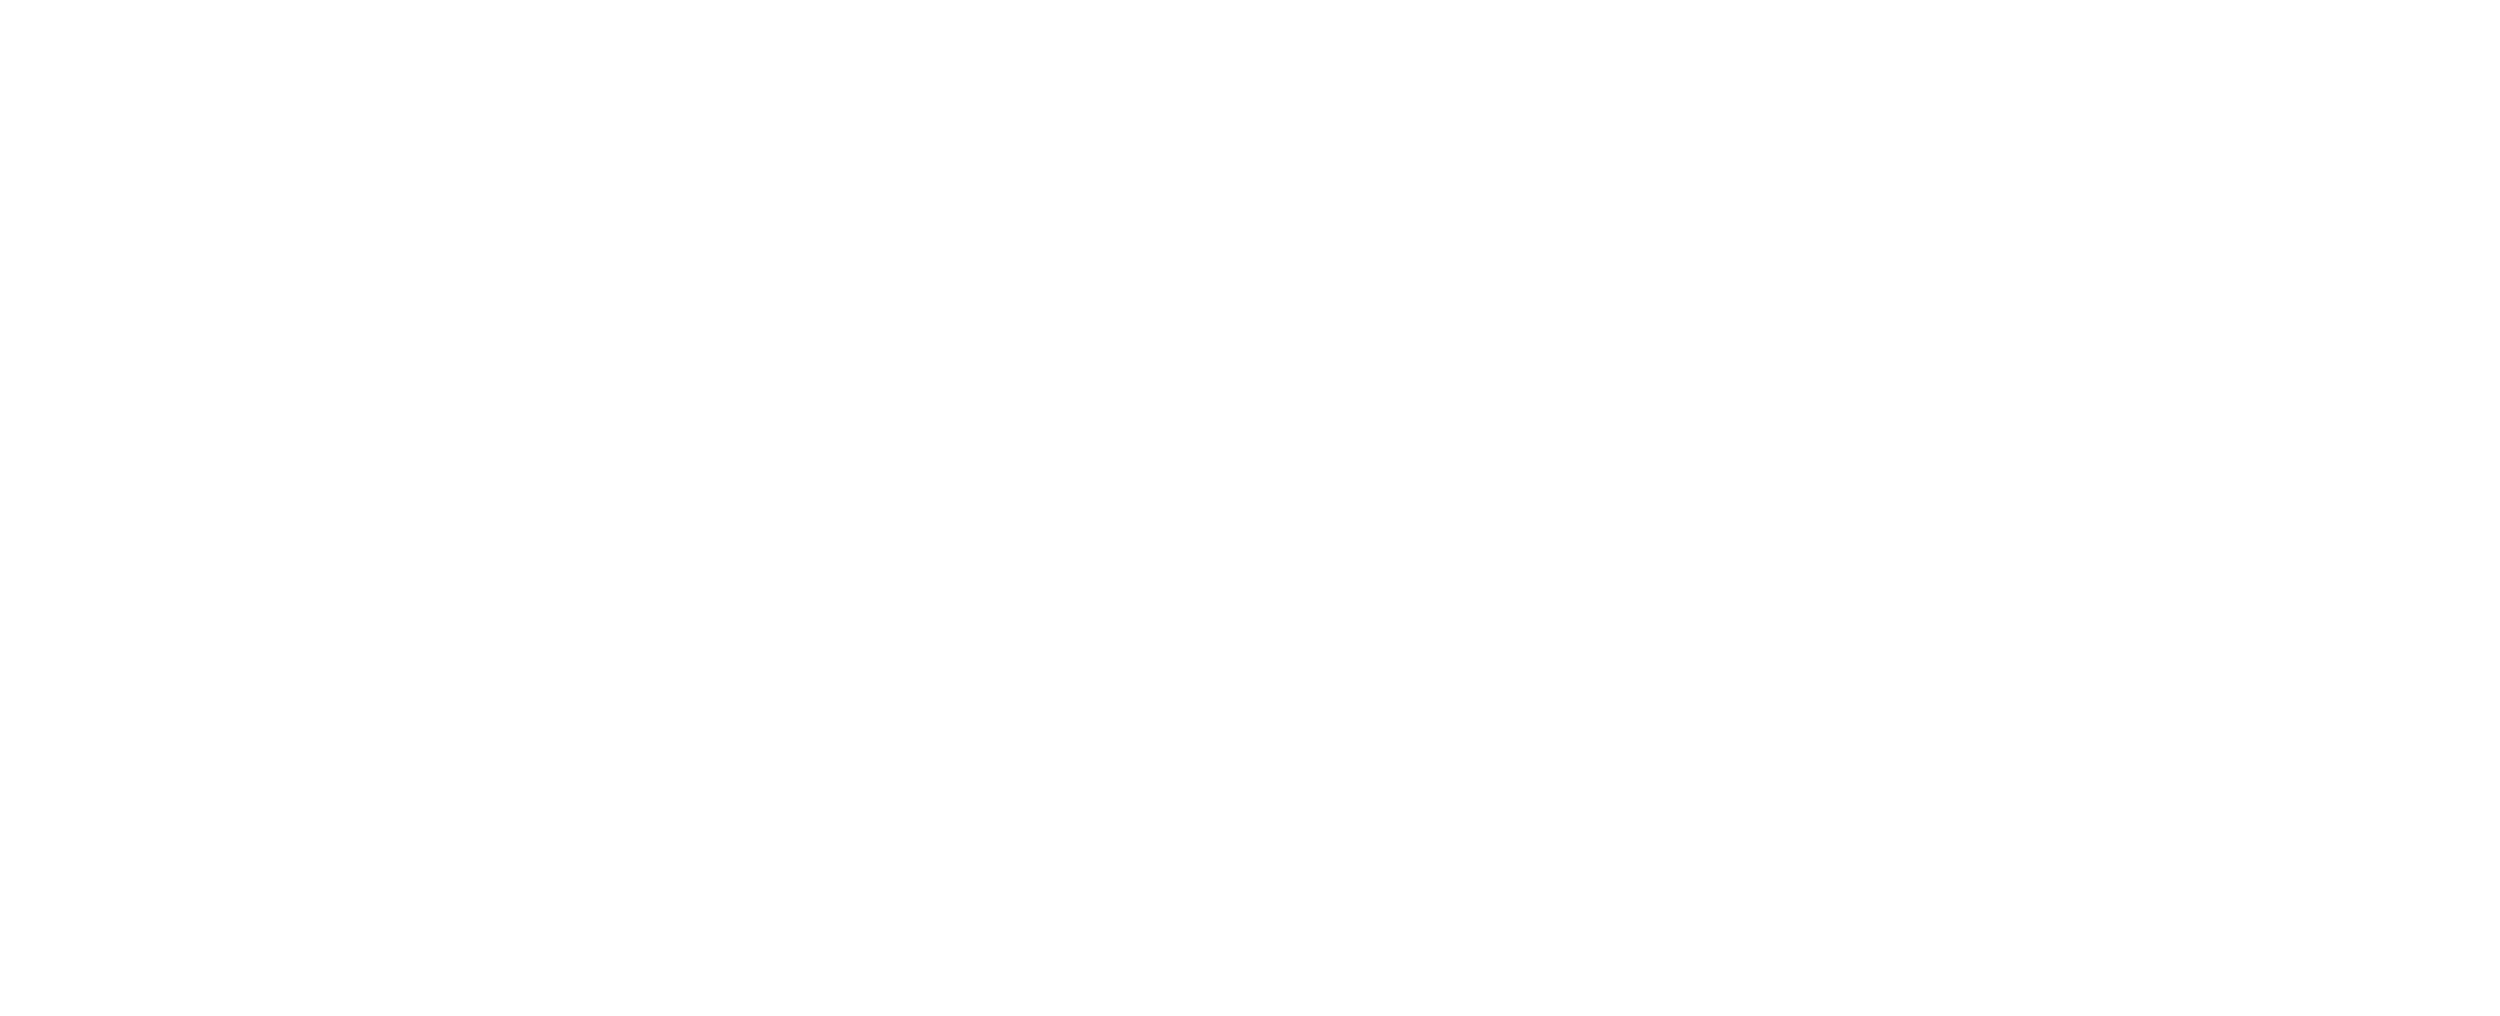 Loudermilk Designs